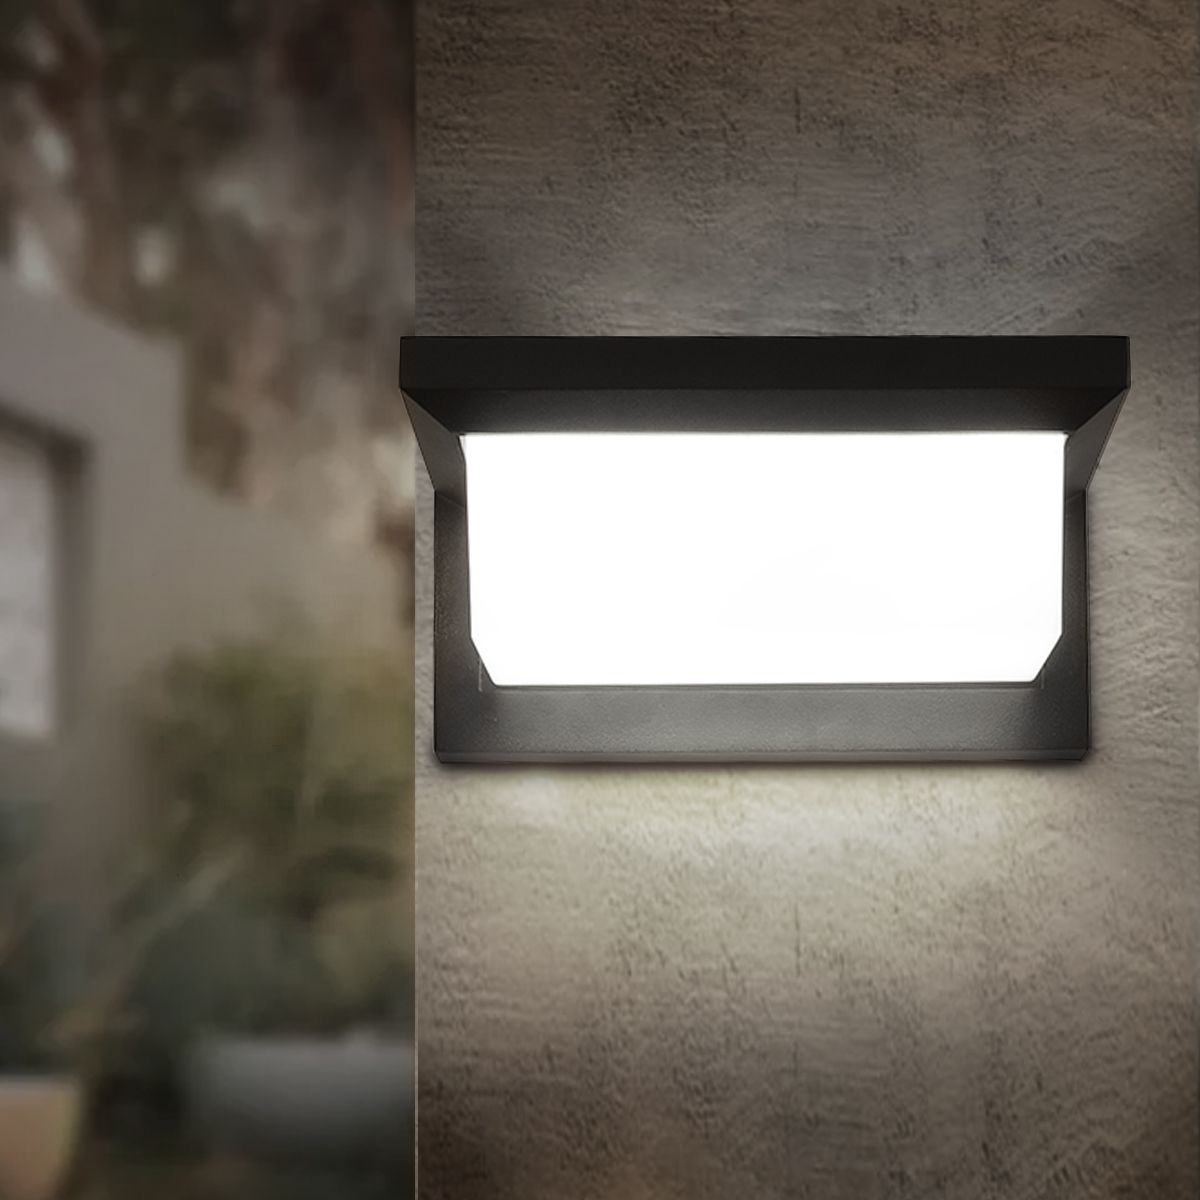 Waterproof-COB-LED-Wall-Light-Indoor-Outdoor-Stair-Hotel-Garden-Lamp-Warm-White-1684398